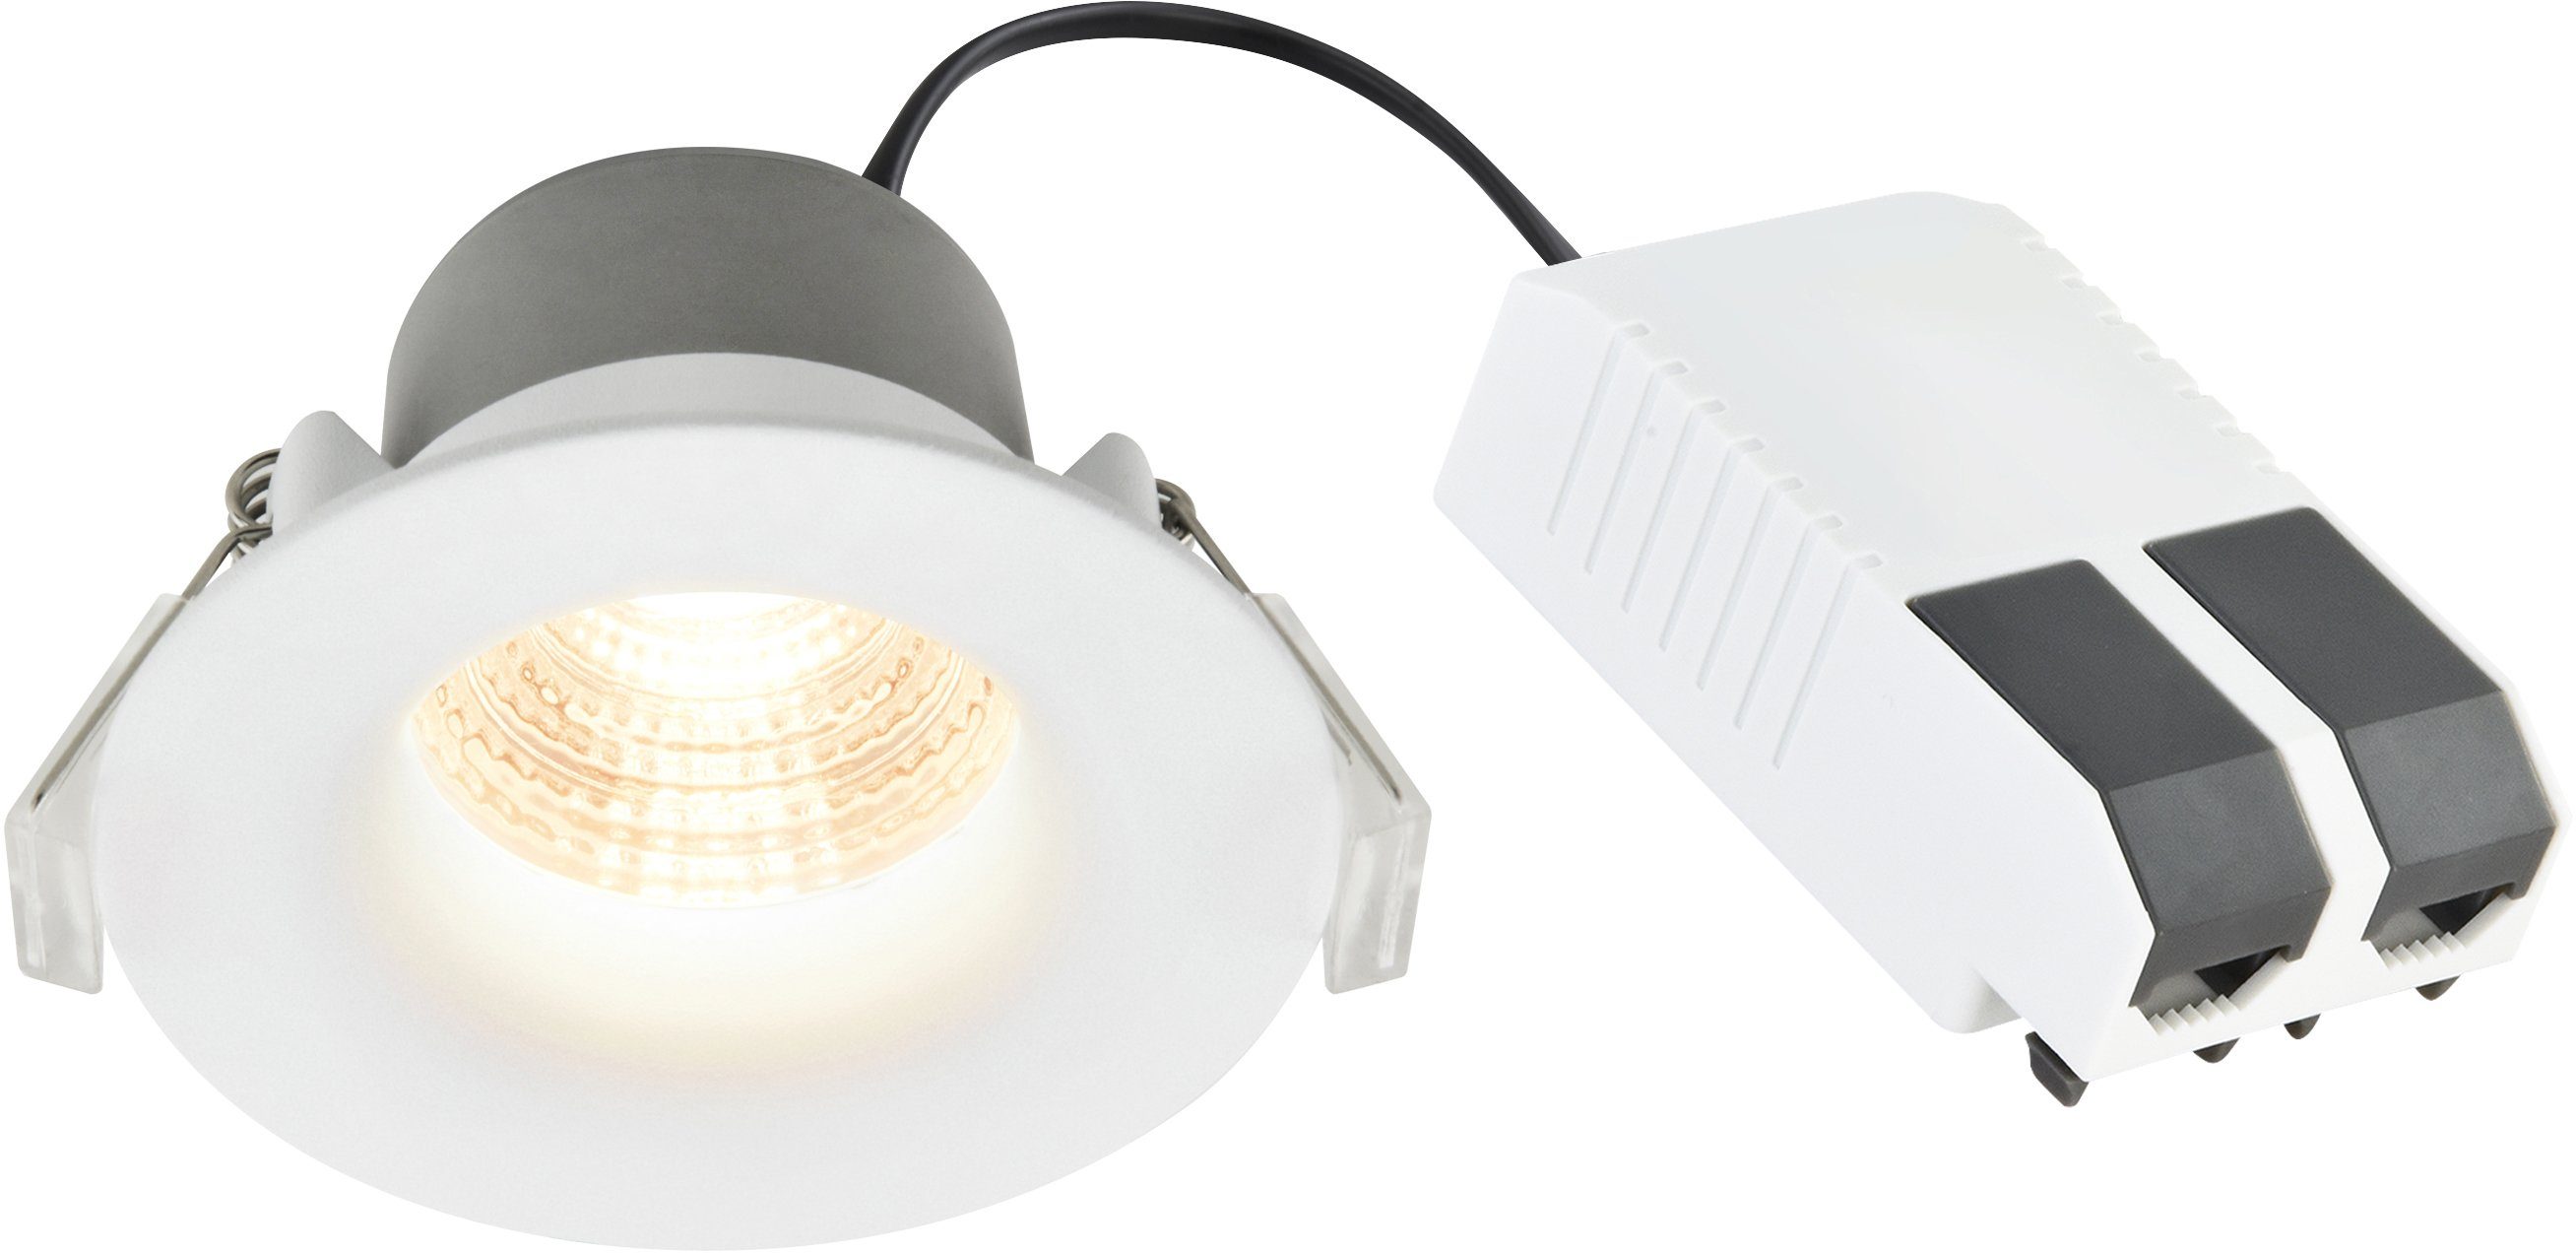 inkl. LED, Warmweiß, Deckenstrahler Starke, LED 6,1W Dimmbar integriert, Nordlux 450 Lumen, fest